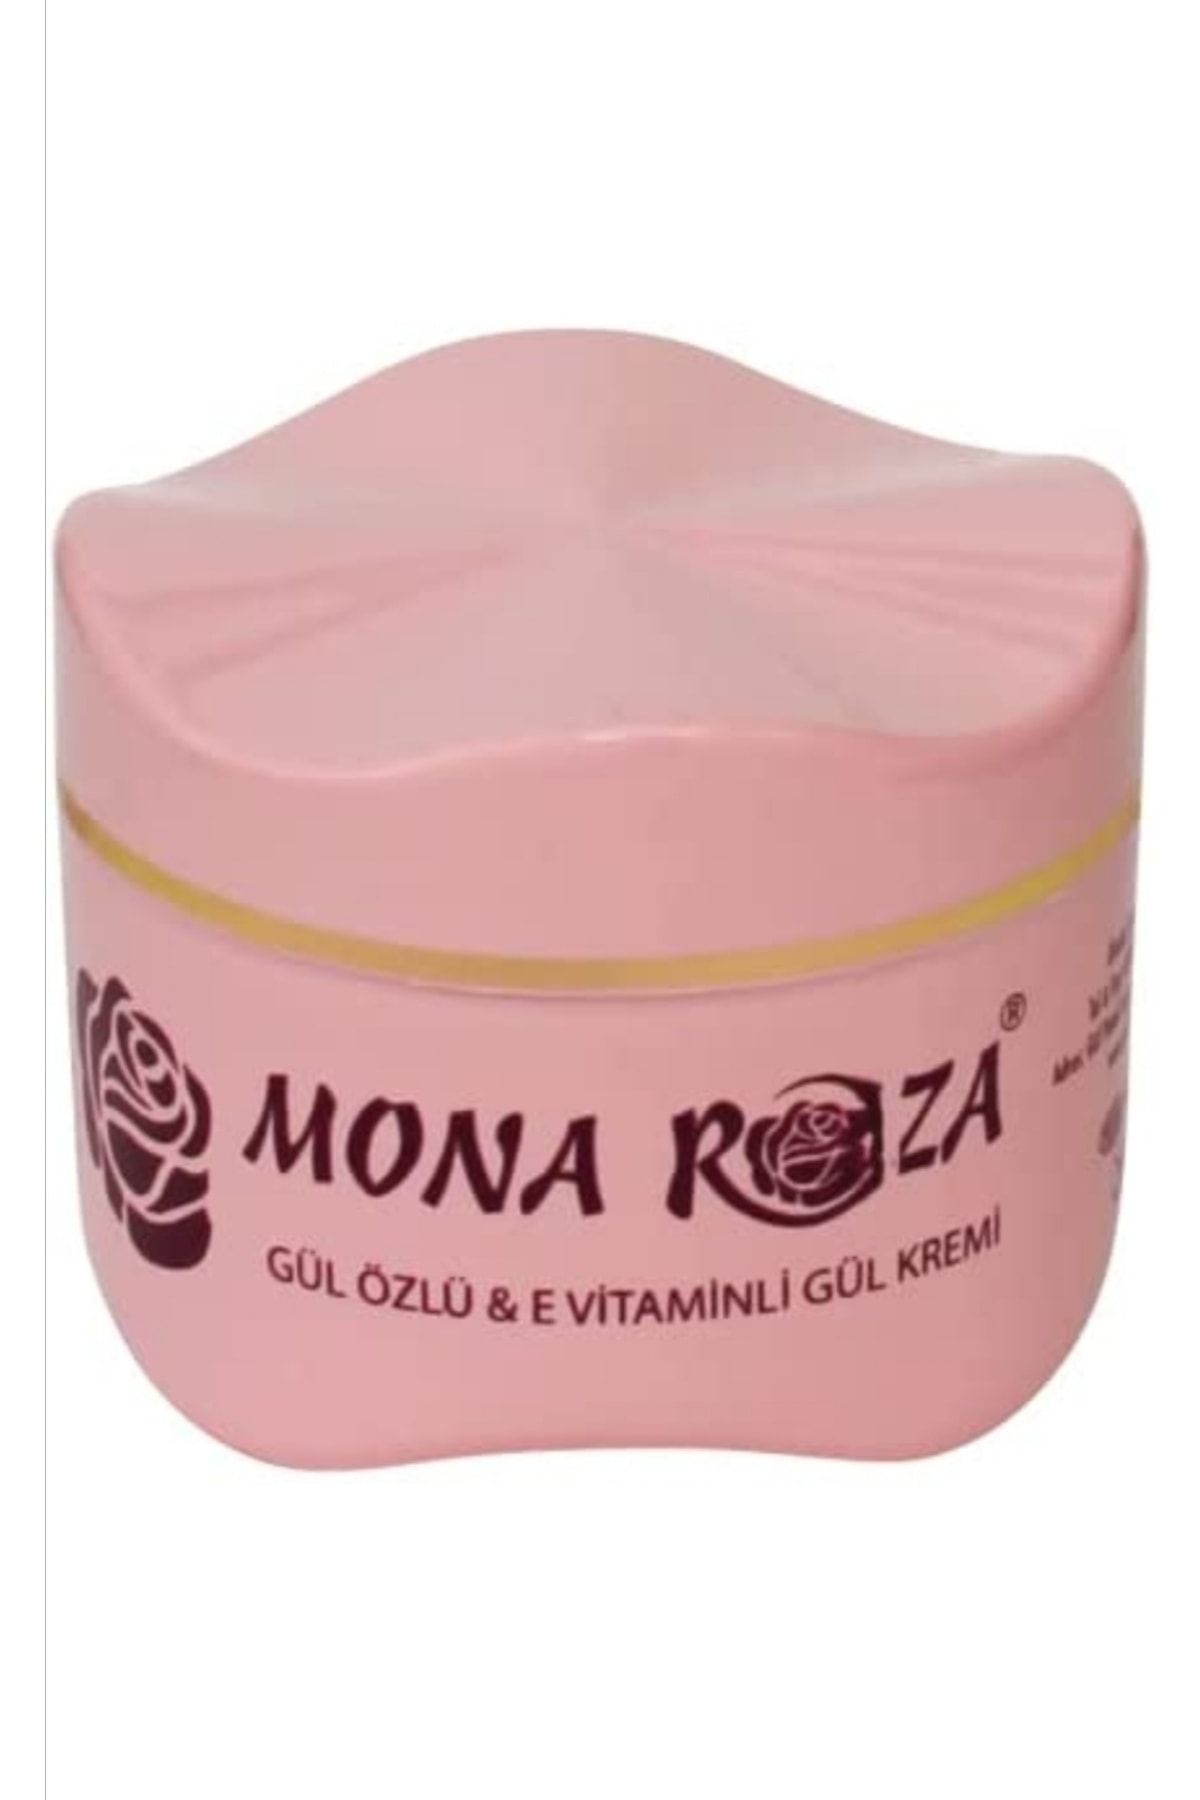 MonaRoza E Vitaminli Gül Kremi